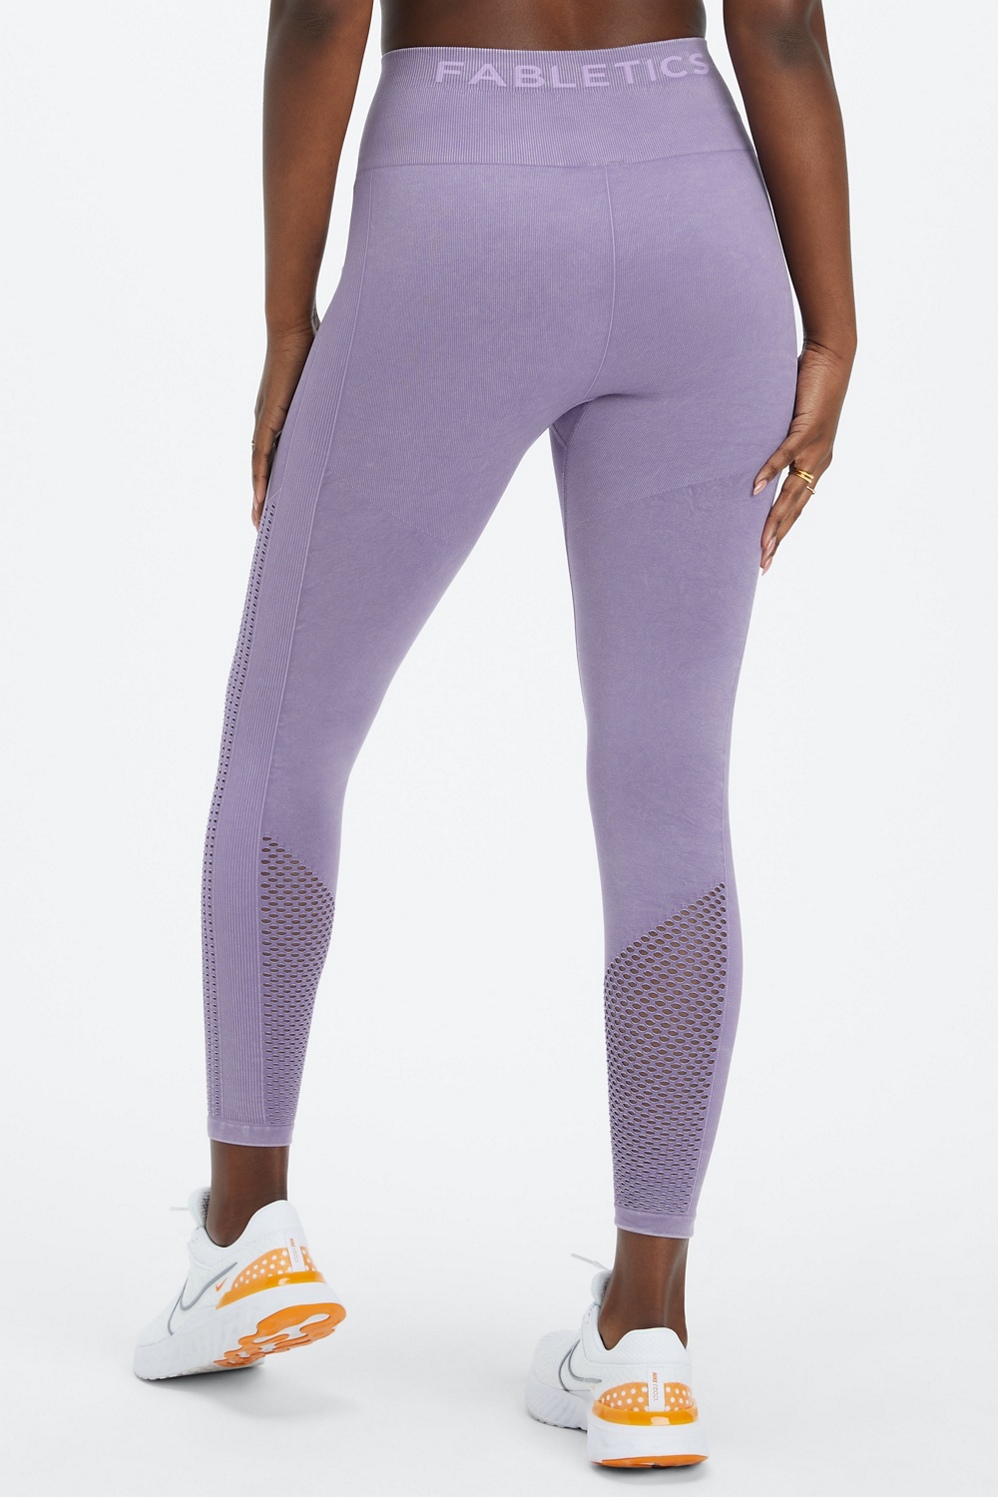 NUX Peloton Seamless Shapeshifter 7/8 Purple Pink Leggings High Waist M for  sale online